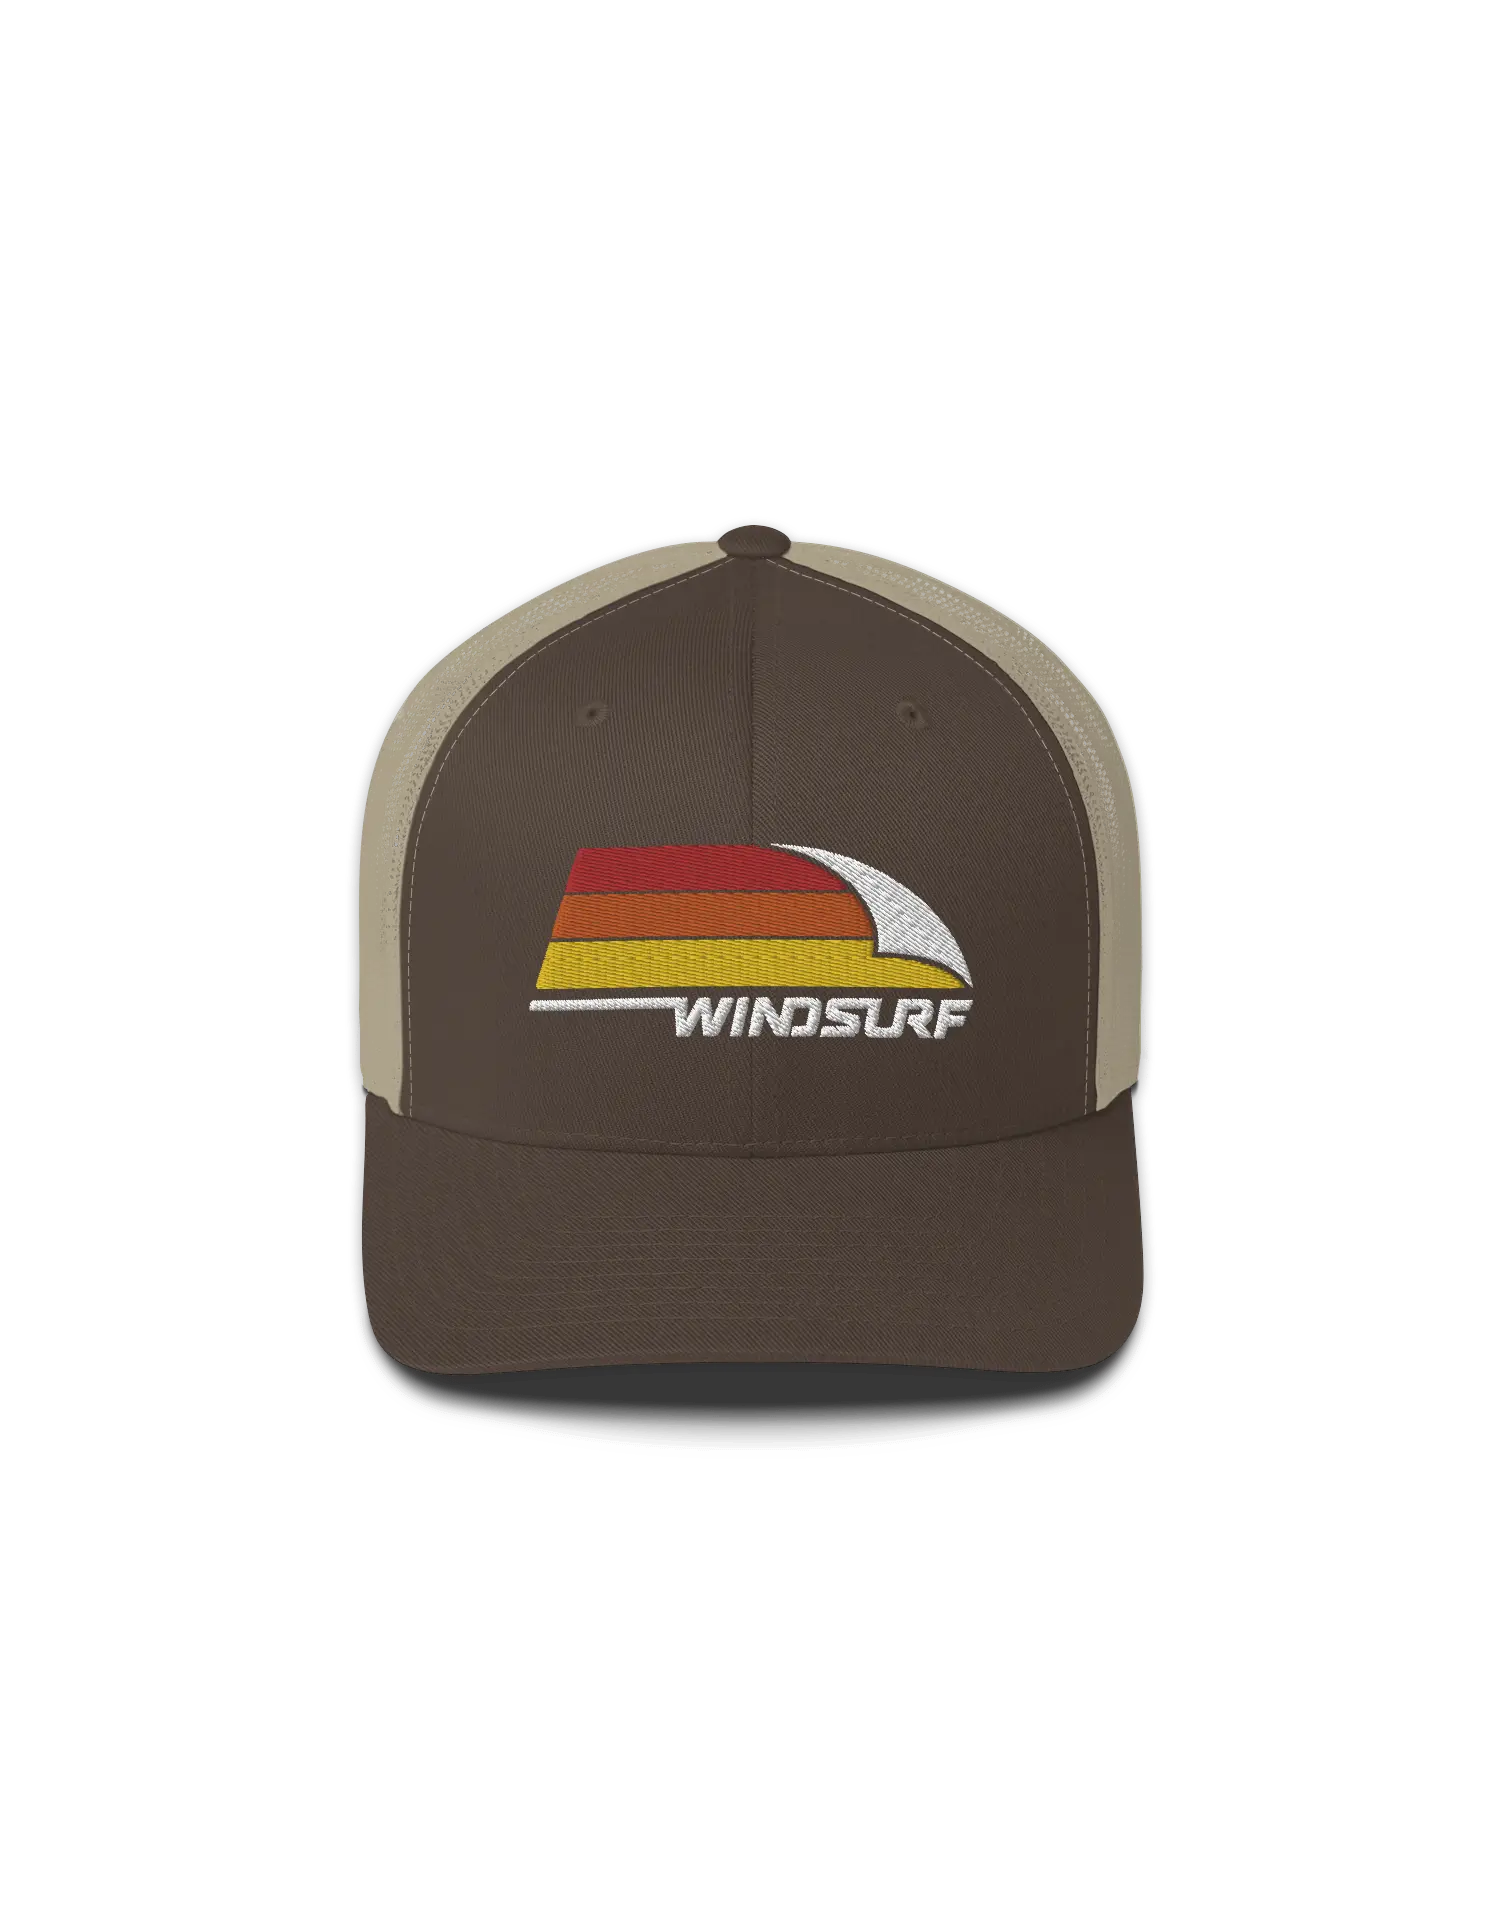 Classic Windsurf Brown/ Khaki Trucker Cap by KOAV